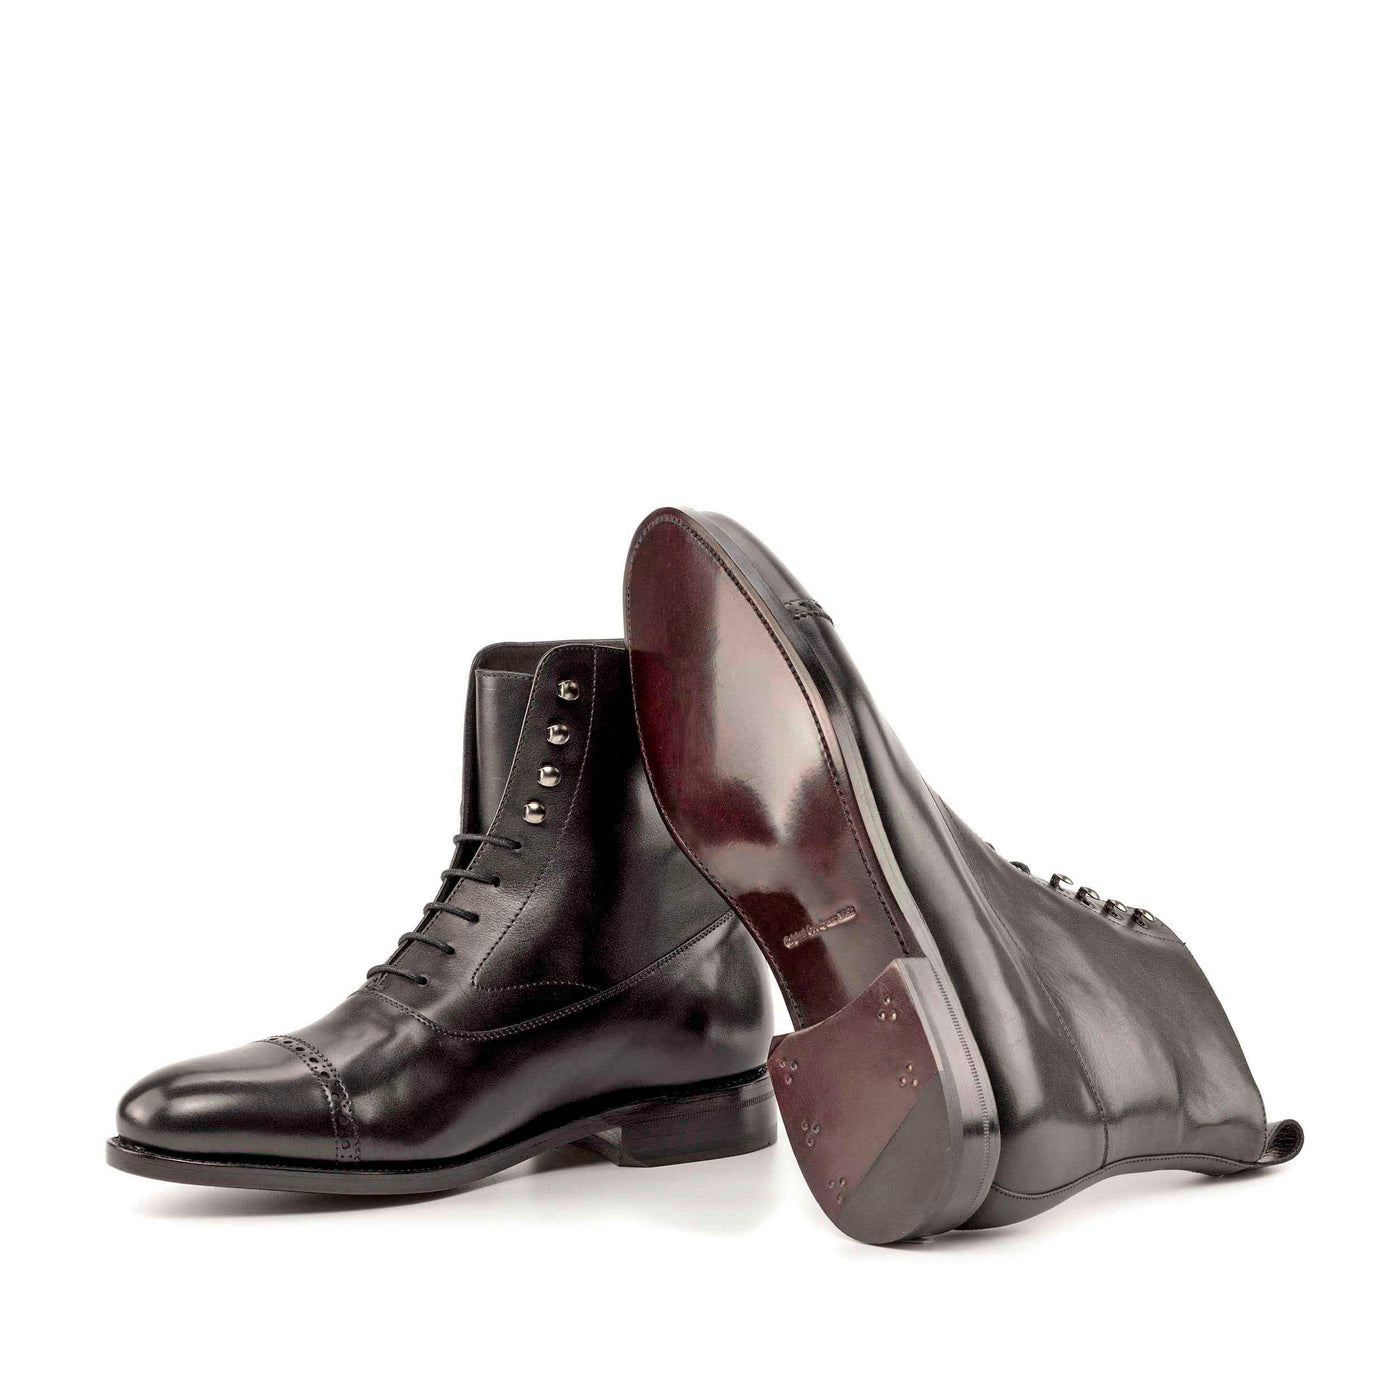 Men's Balmoral Boots Leather Goodyear Welt Black 5034 2- MERRIMIUM